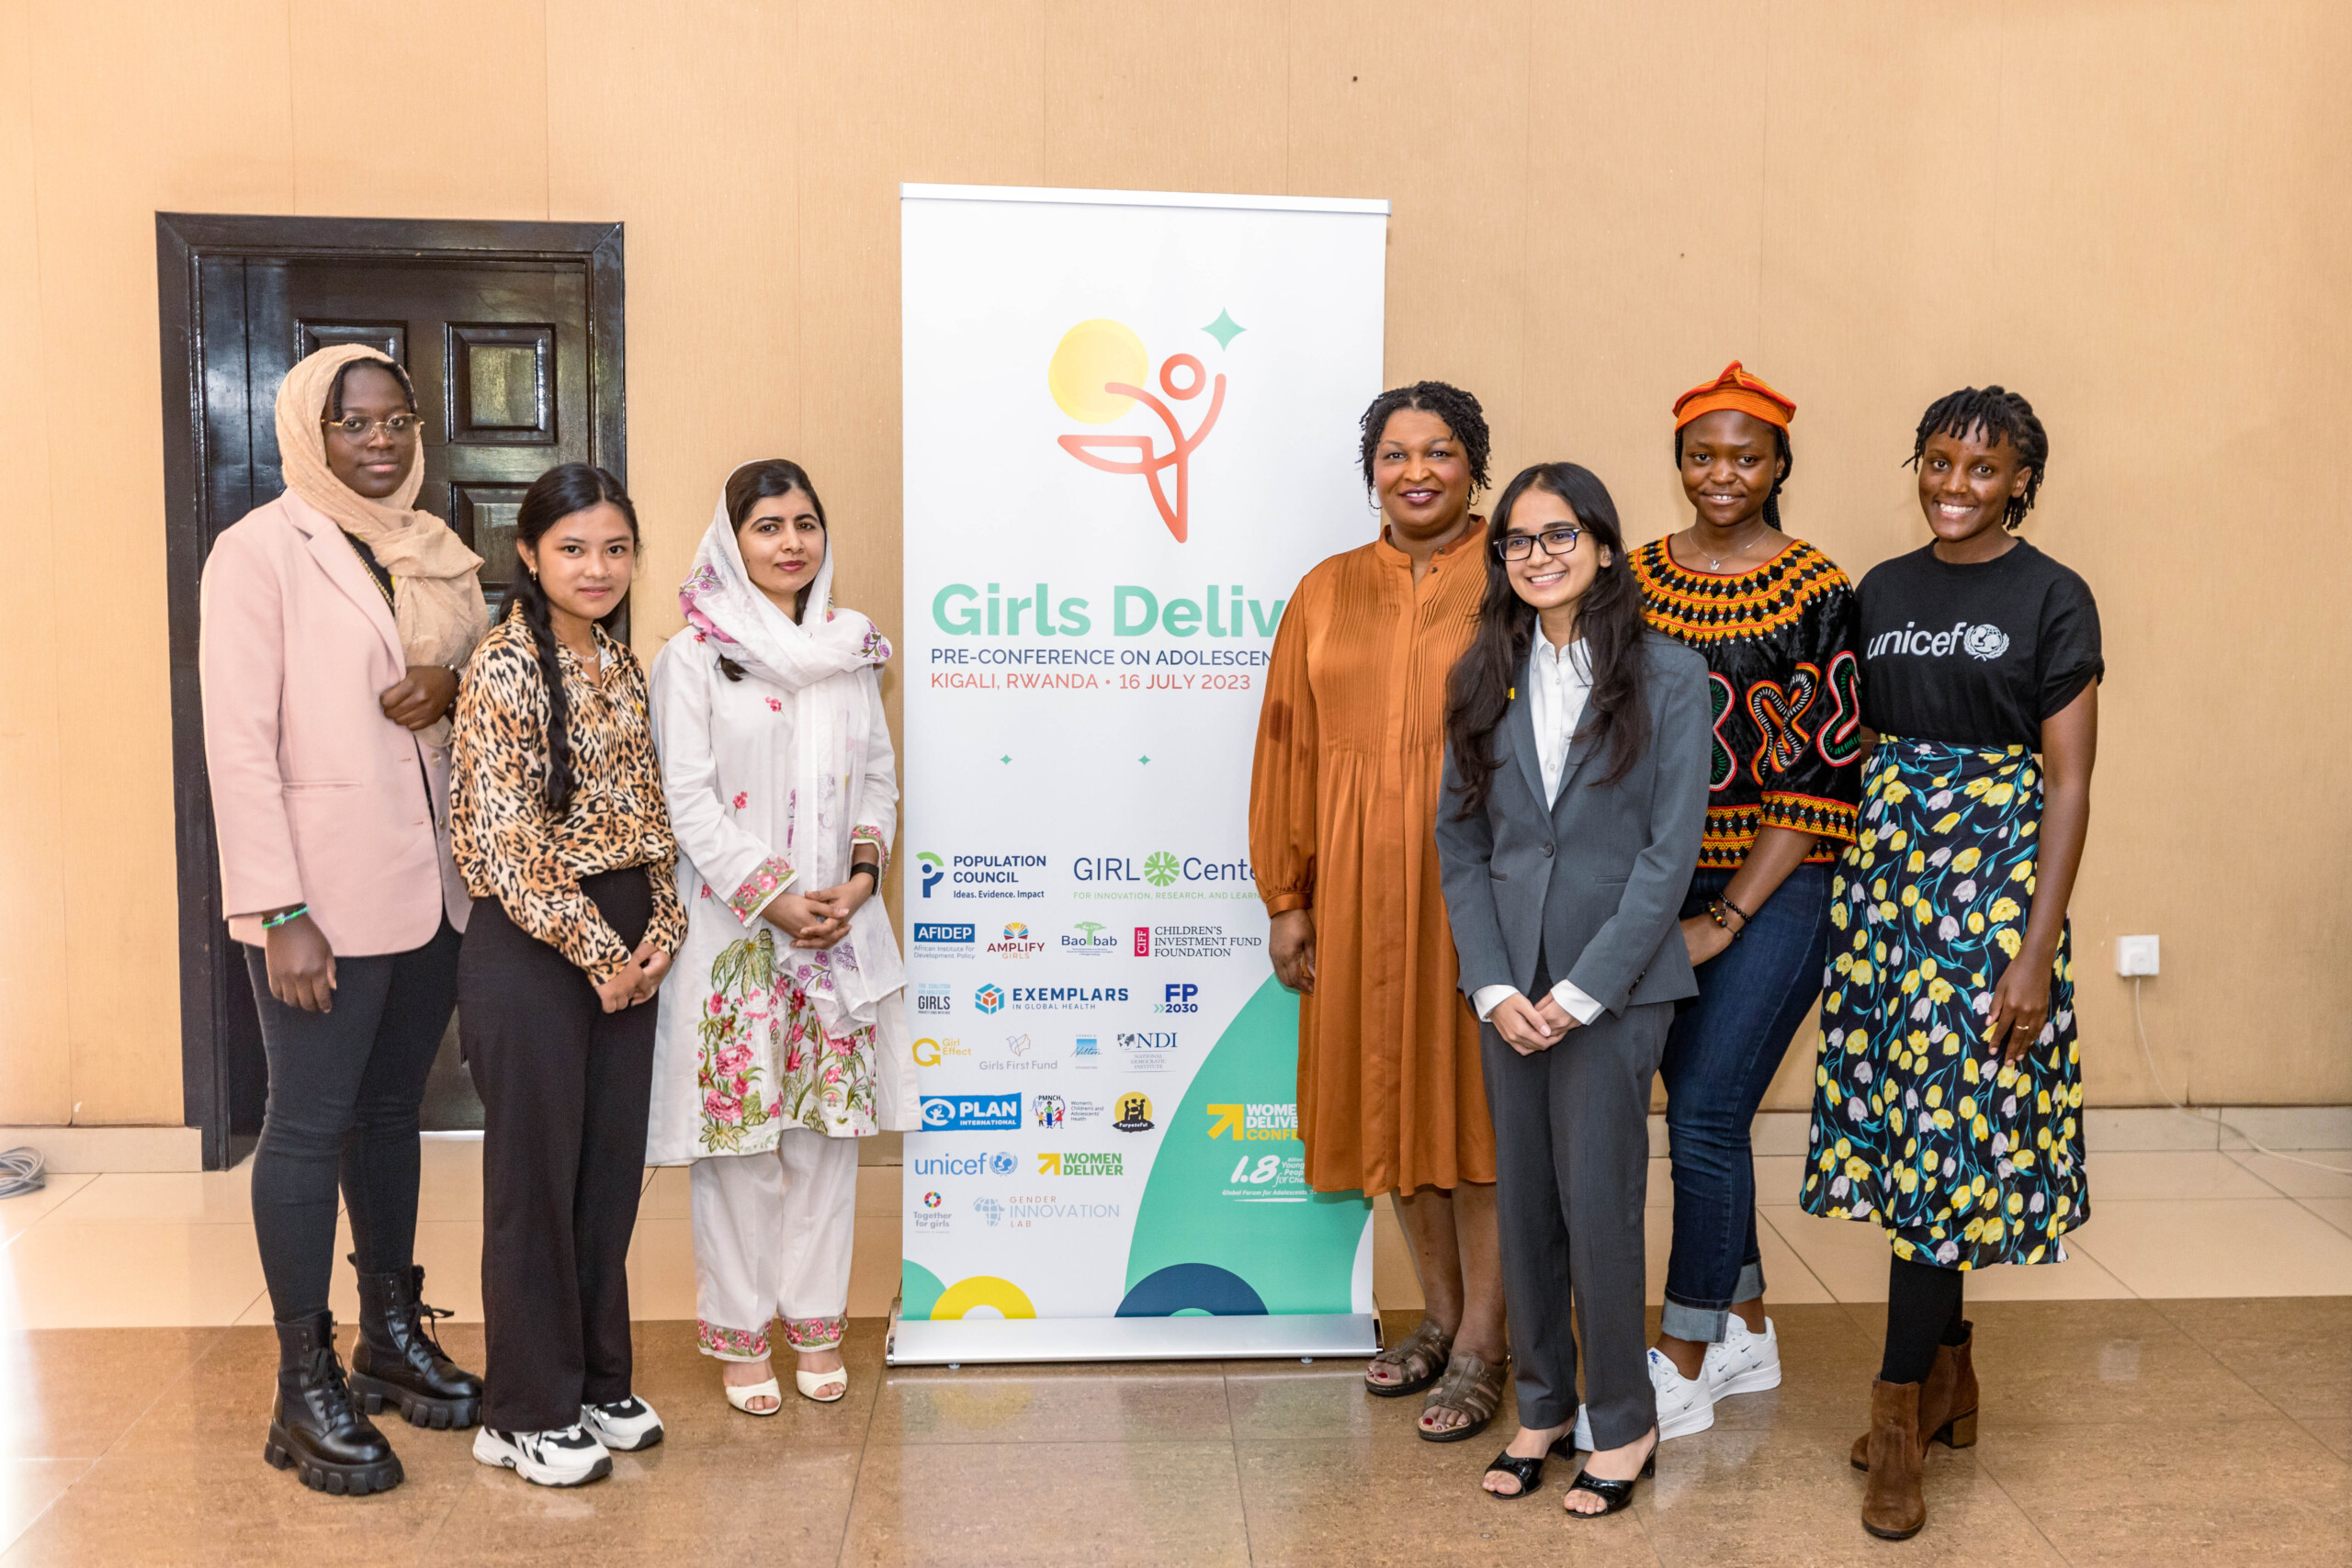 From L-R: Divina Maloum, Lalita Tamang, Malala Yousafzai, Stacey Abrams, Kalpa Garg, Condolizzarice Akumawah, and Vanessa Nakate meet ahead of starting the day with Girls Deliver. 